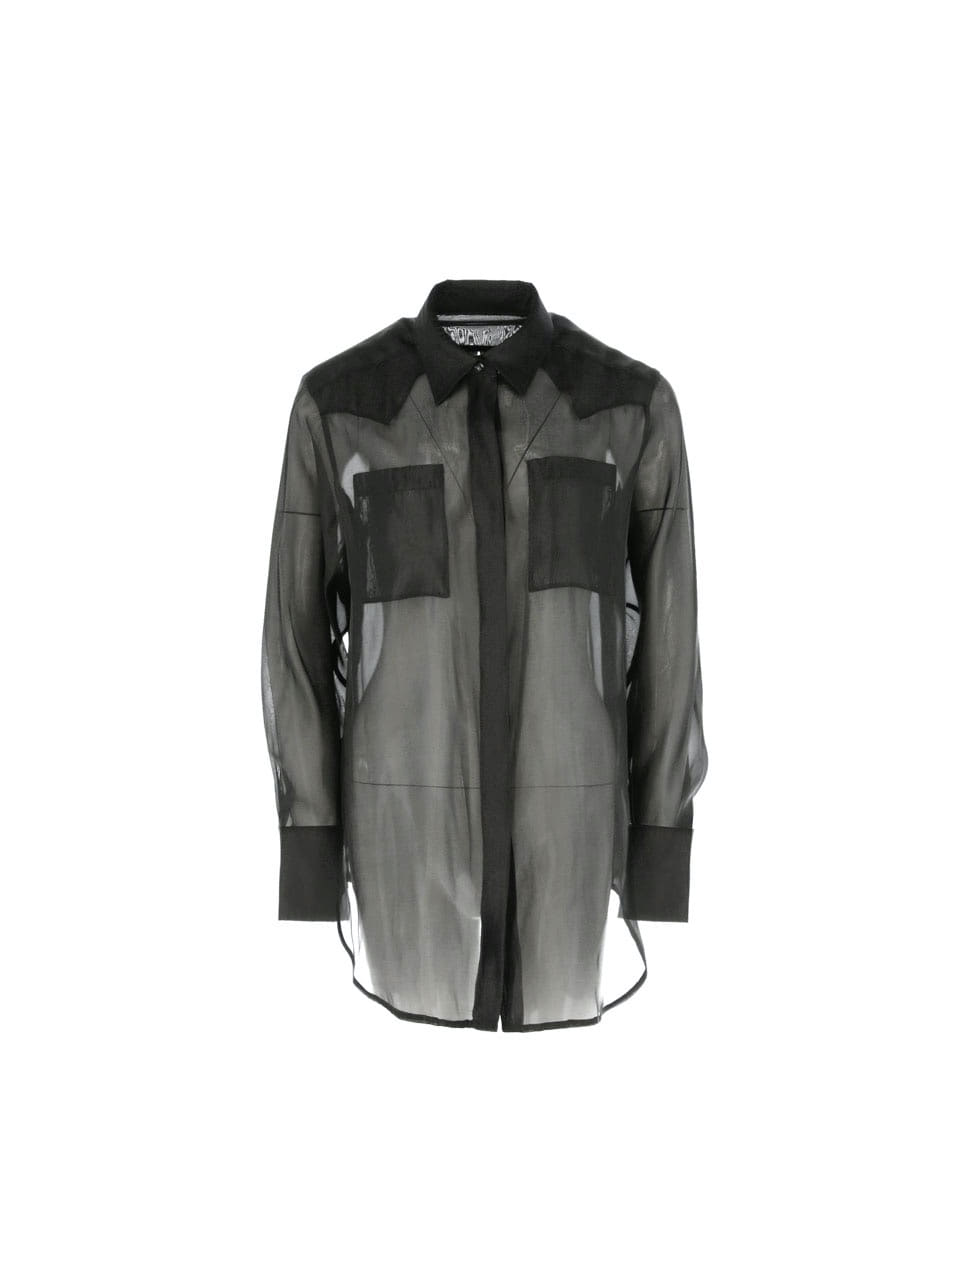 6A Pocket detailed slik organza shirt (Black)